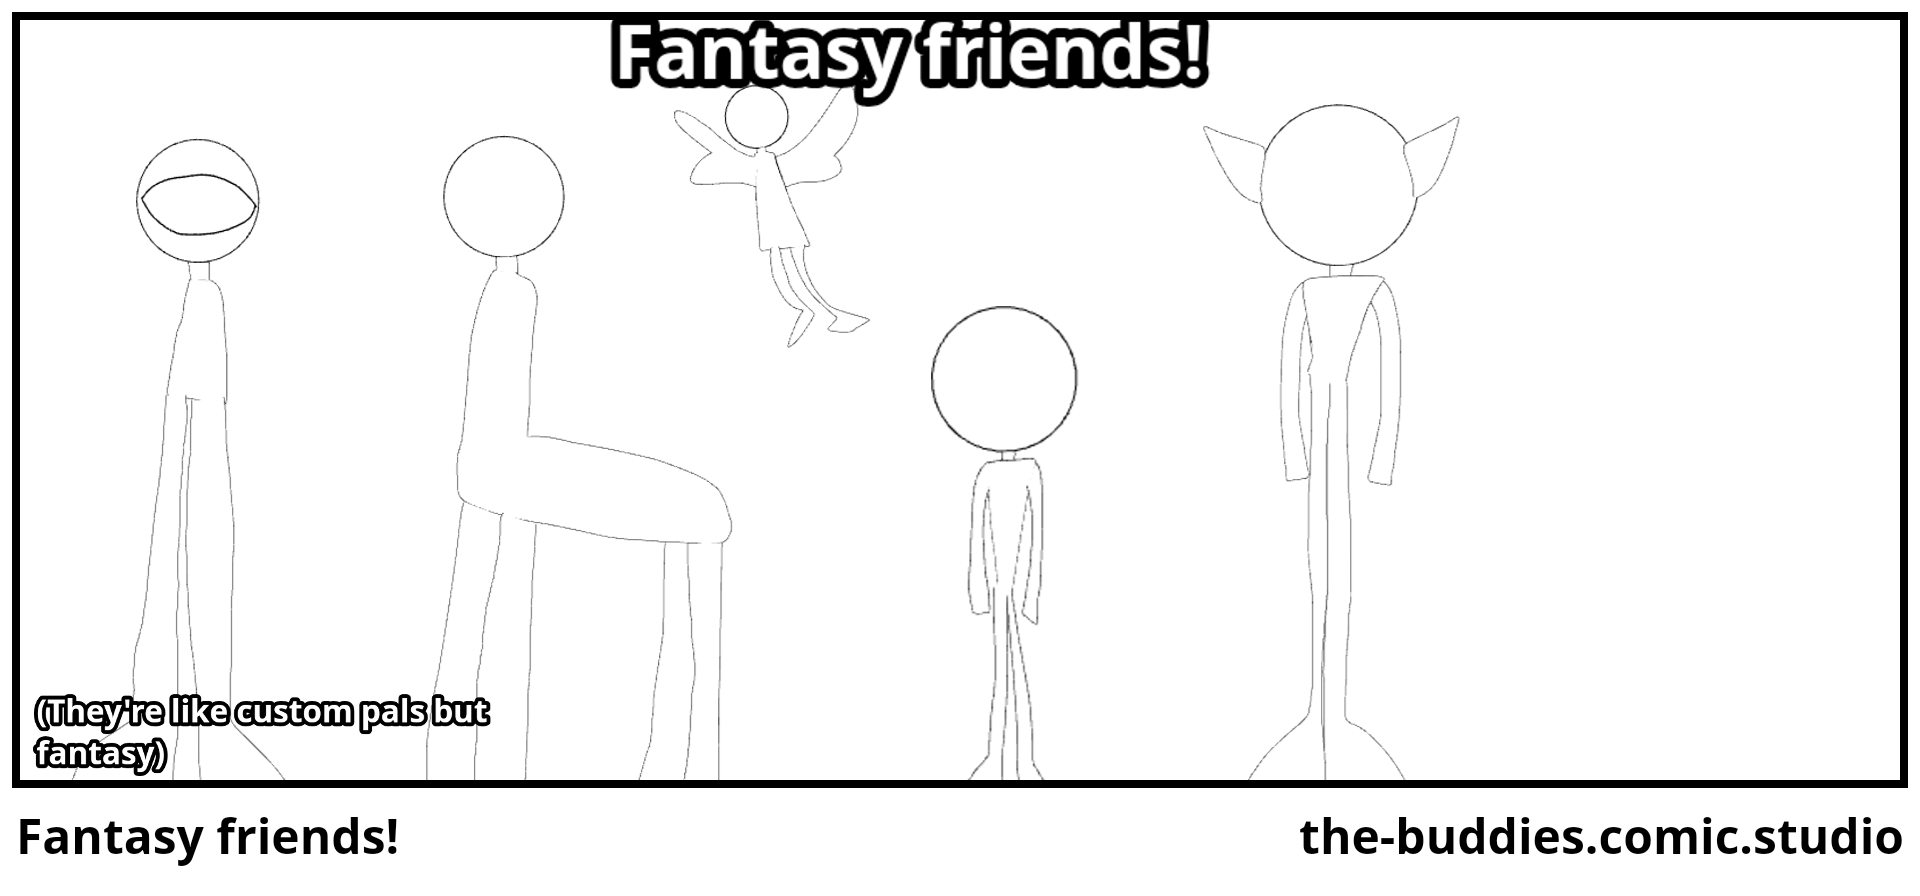 Fantasy friends!